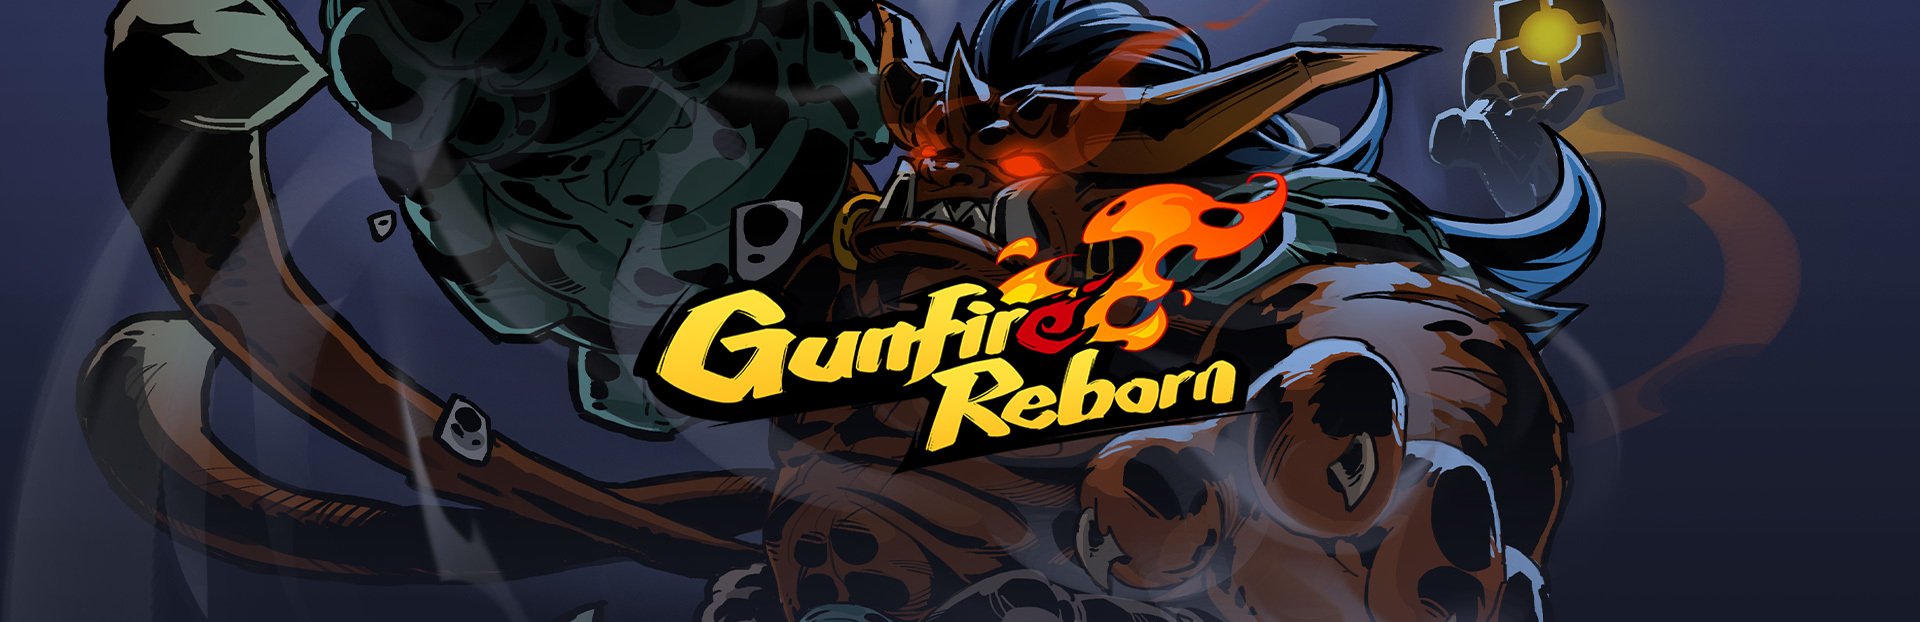 Steam - Gunfire Reborn - Update Notes 5 2020